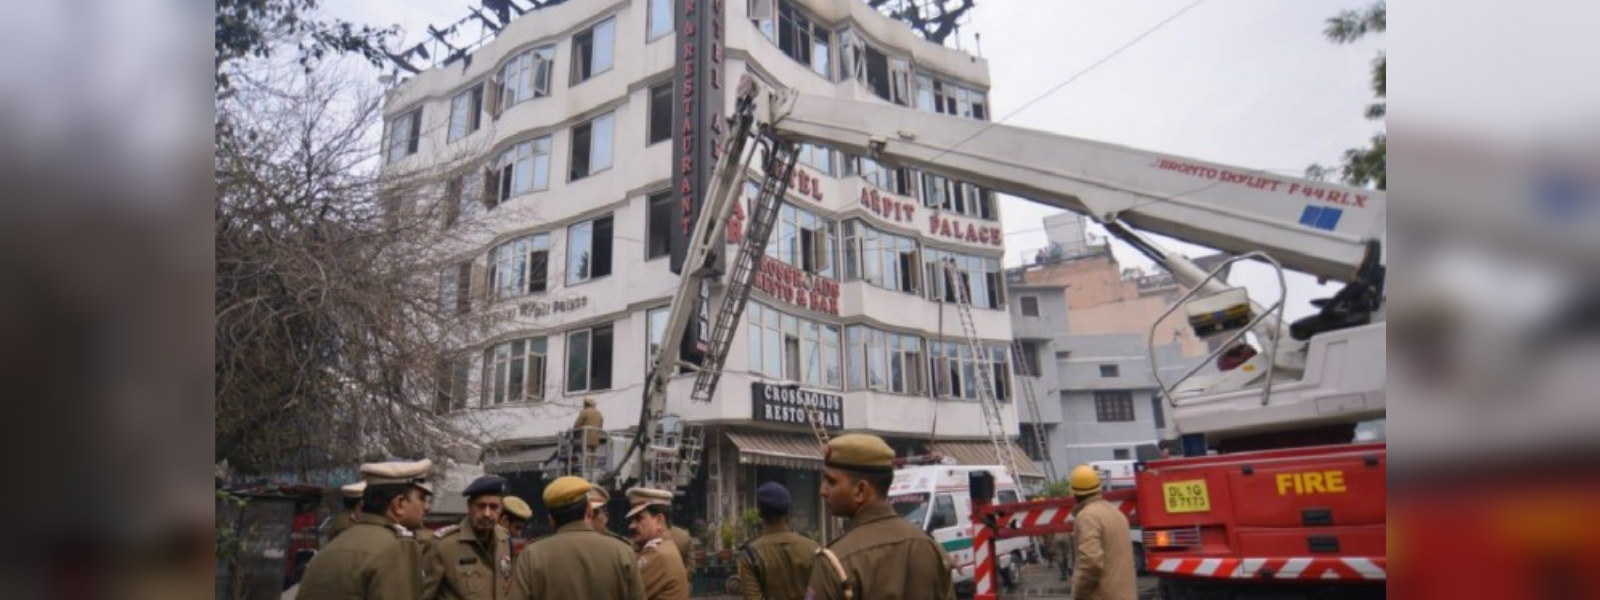 17 killed in Delhi hotel fire 